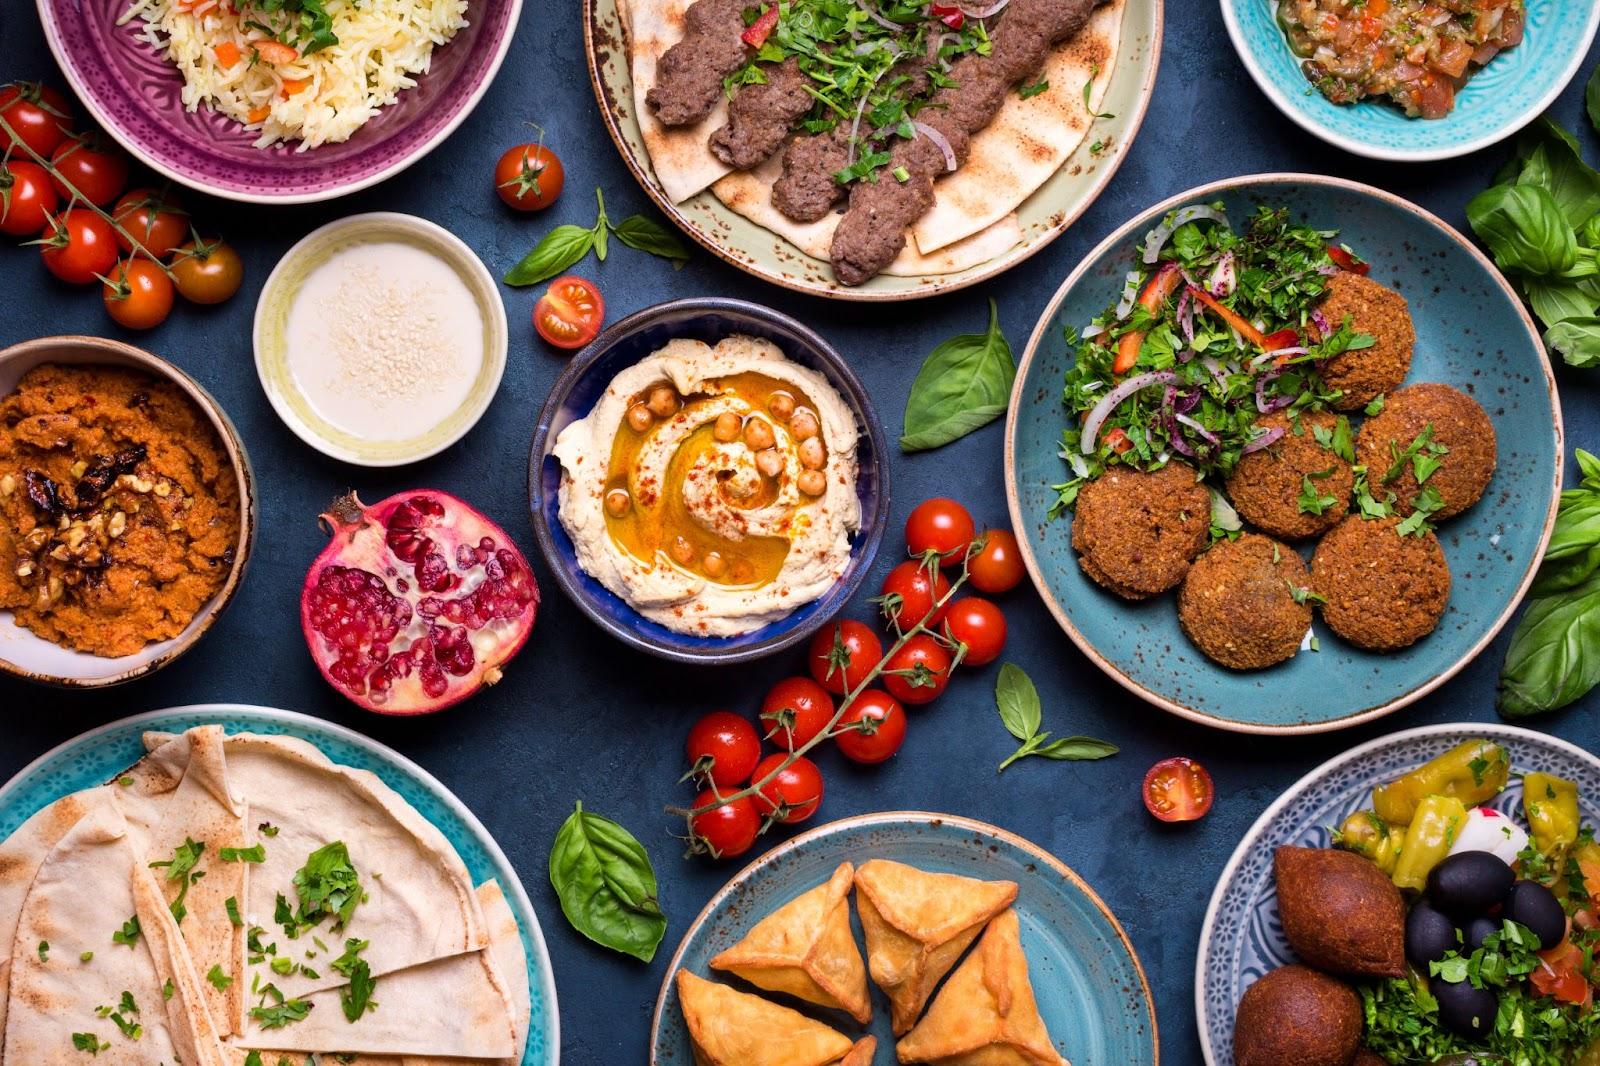 Meat kebab, falafel, baba ghanoush, muhammara, hummus, sambusak, rice, tahini, kibbeh, pita. Halal food. Lebanese cuisine